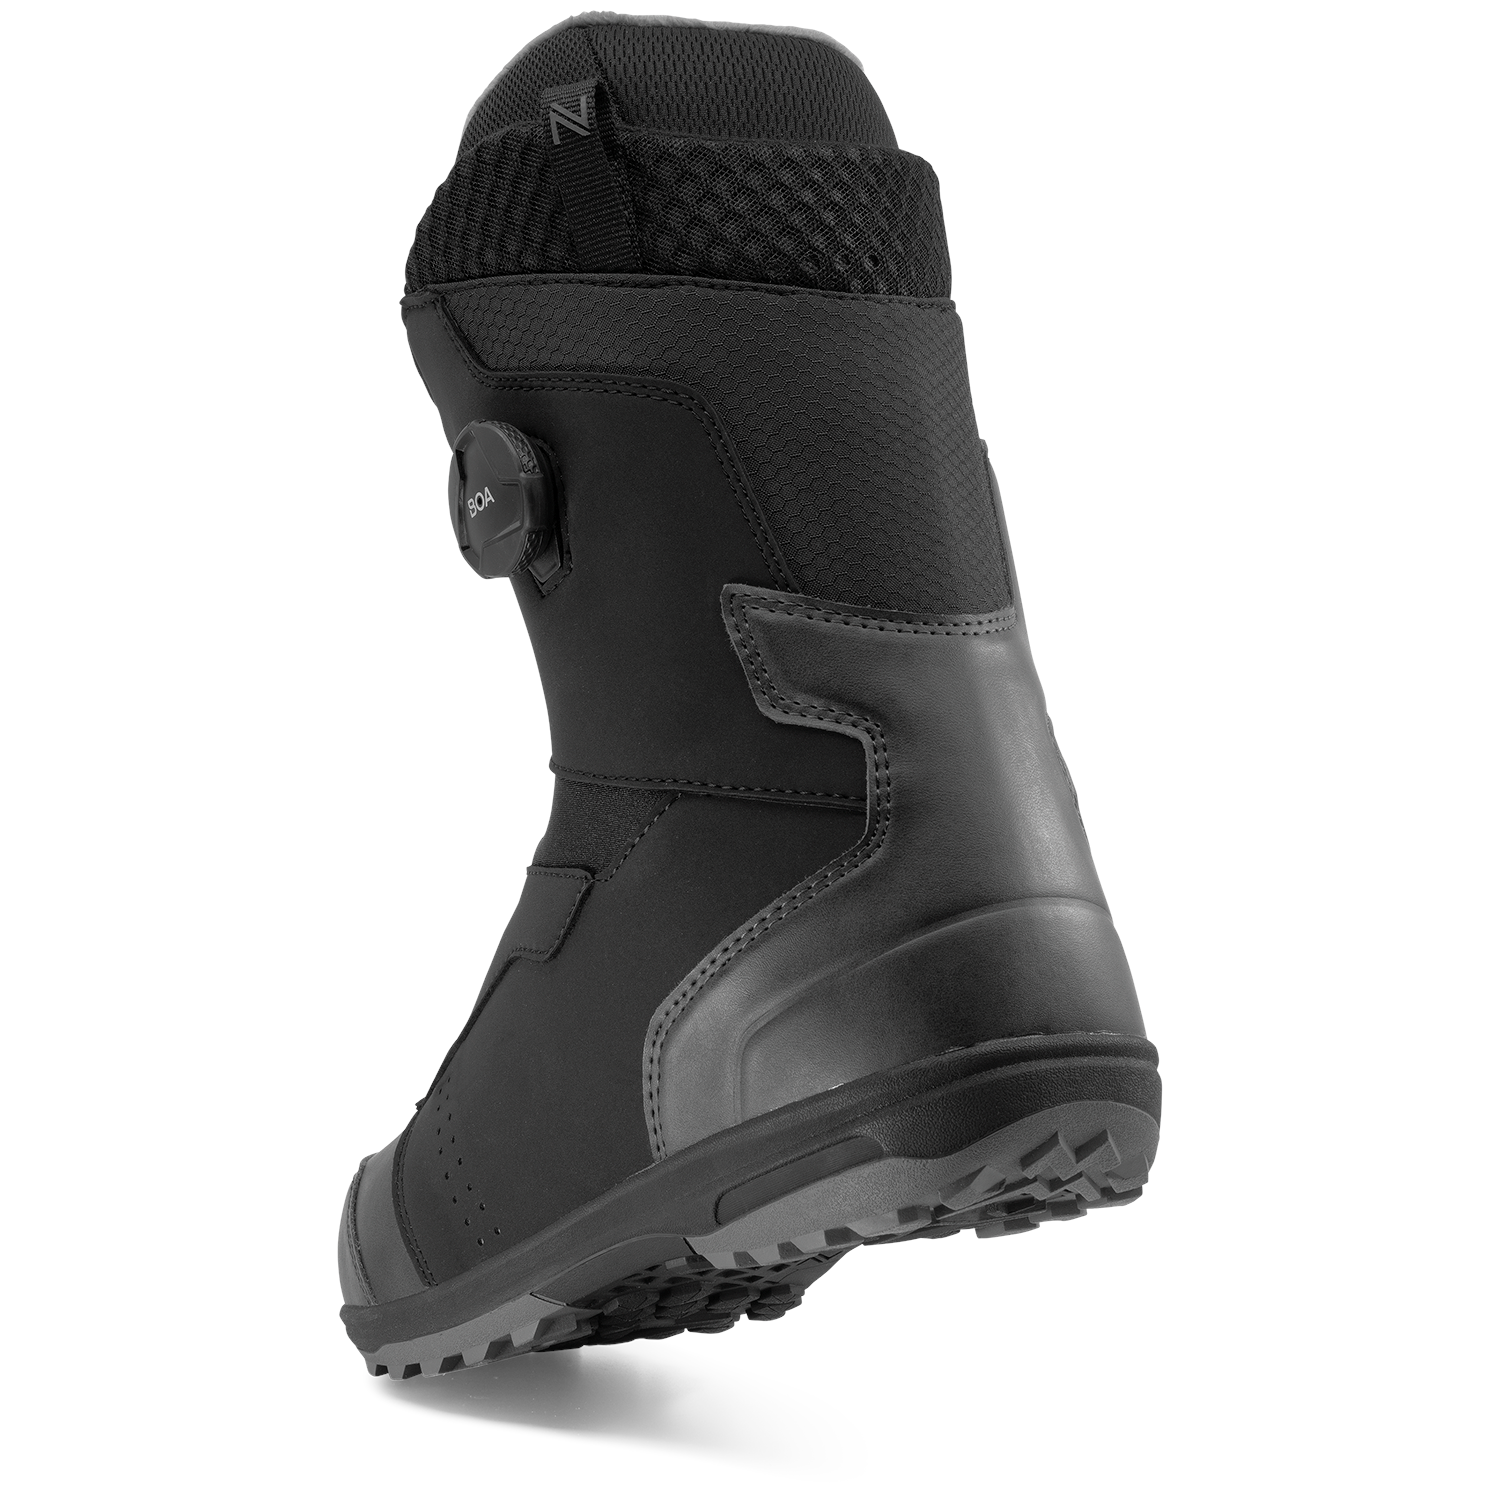 Nidecker Triton Focus Boa Snowboard Boots 2020